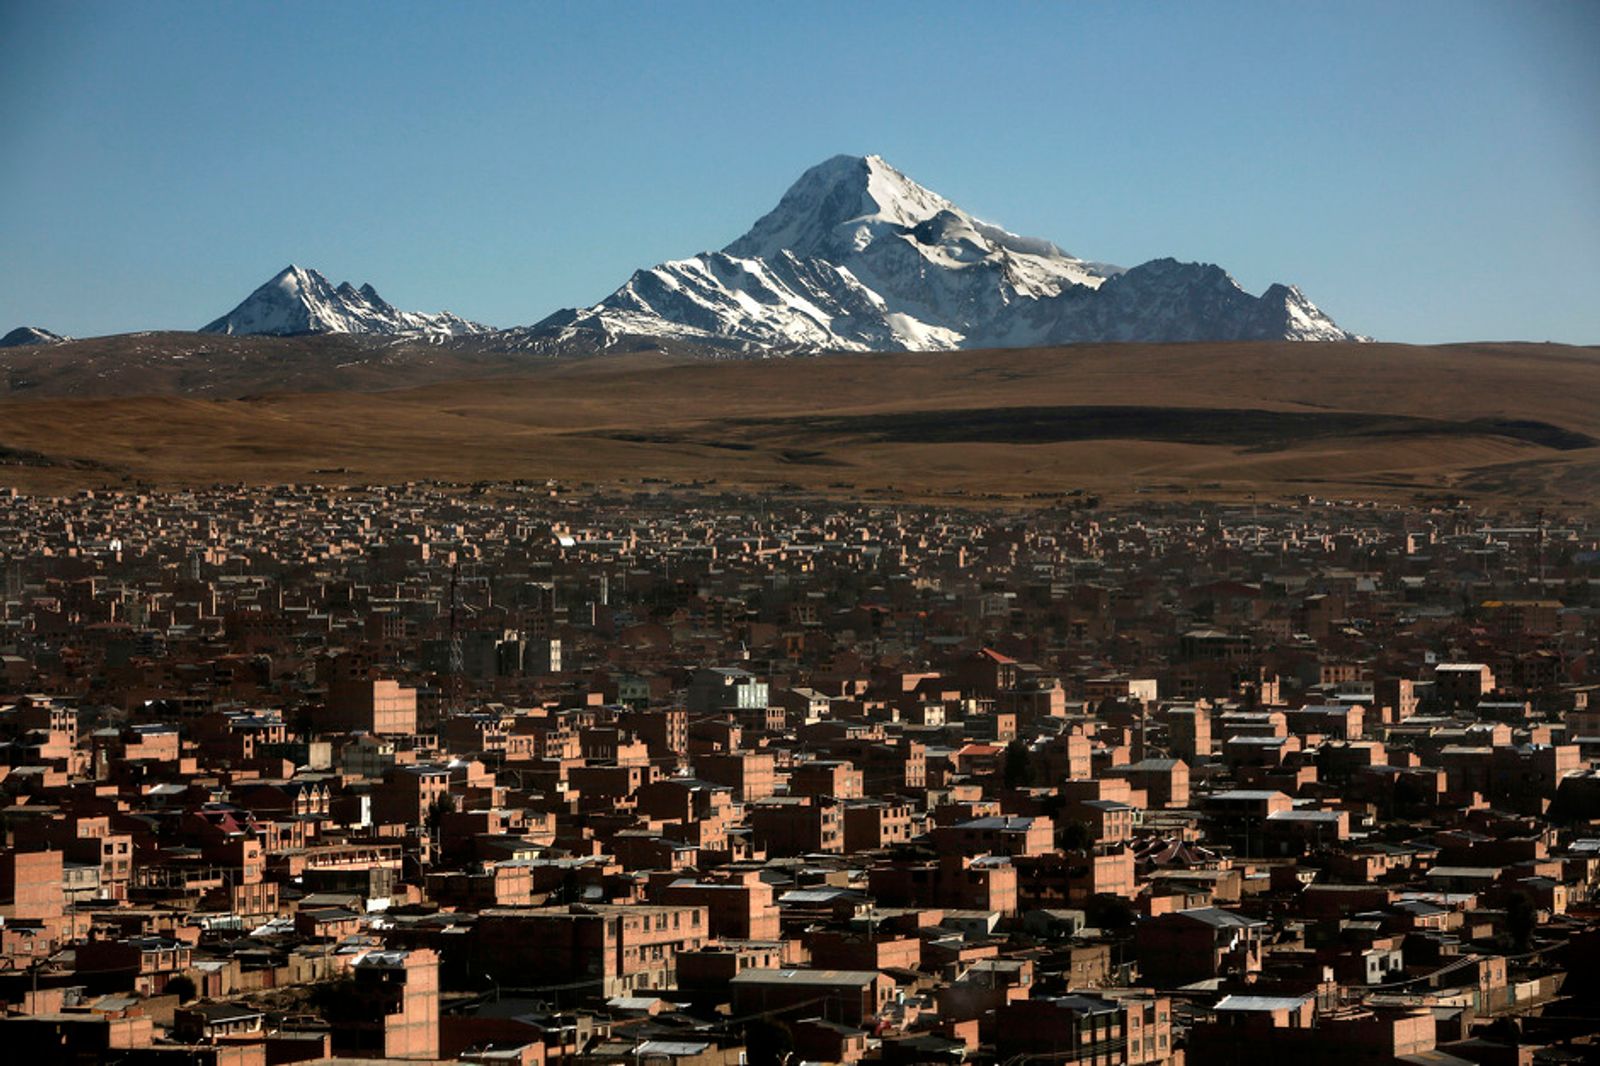 © Olmo Calvo - General view of El Alto city, next to La Paz in Bolivia. September 2th 2013